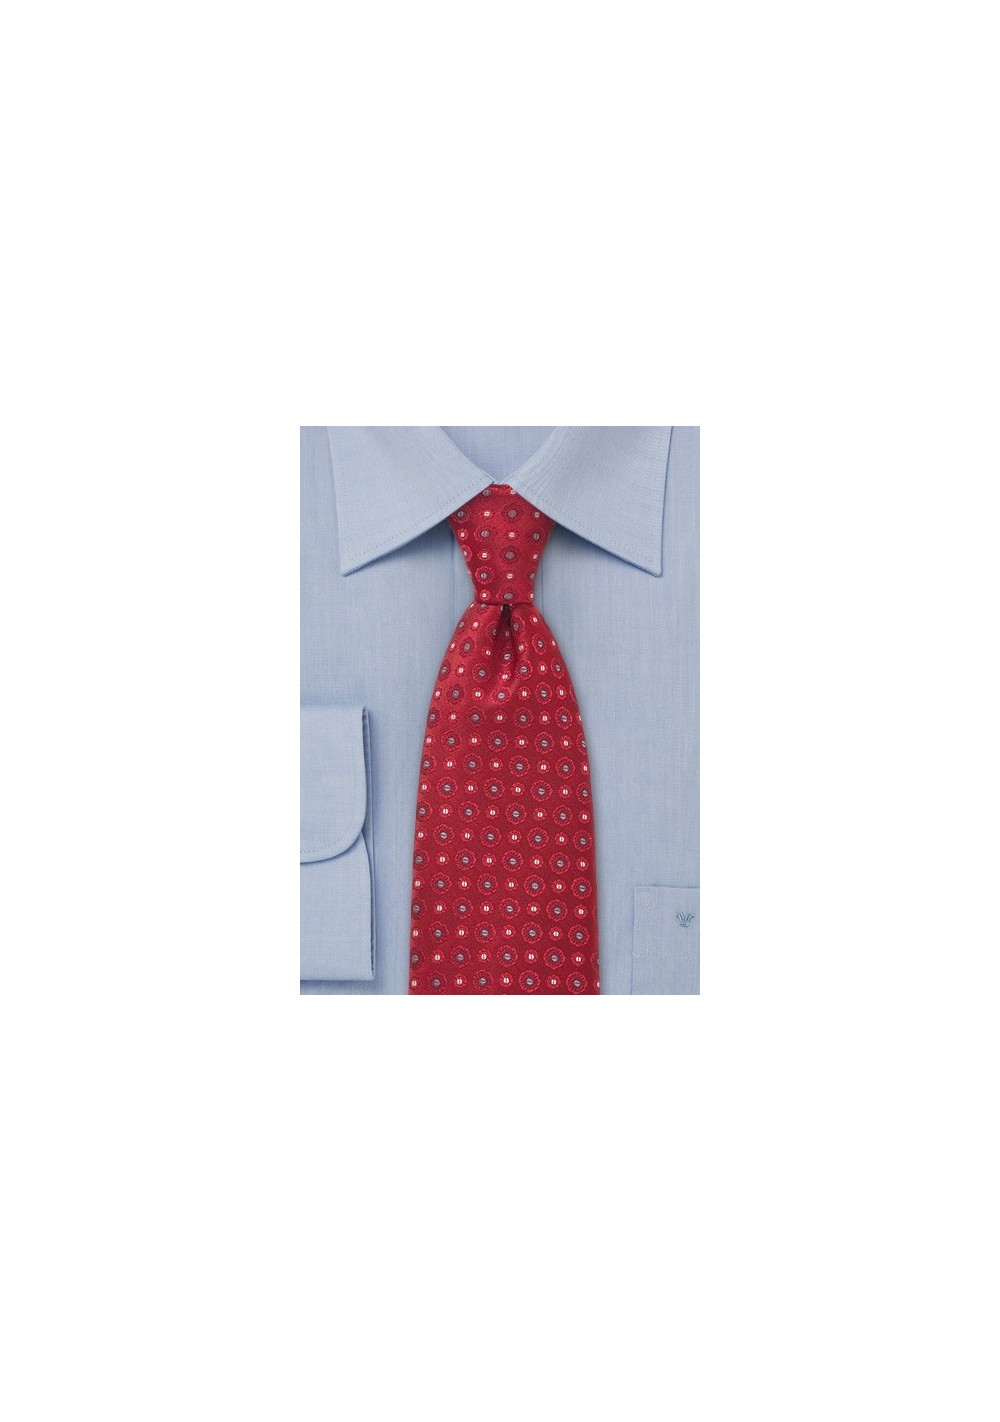 Red Silver White Designer Tie